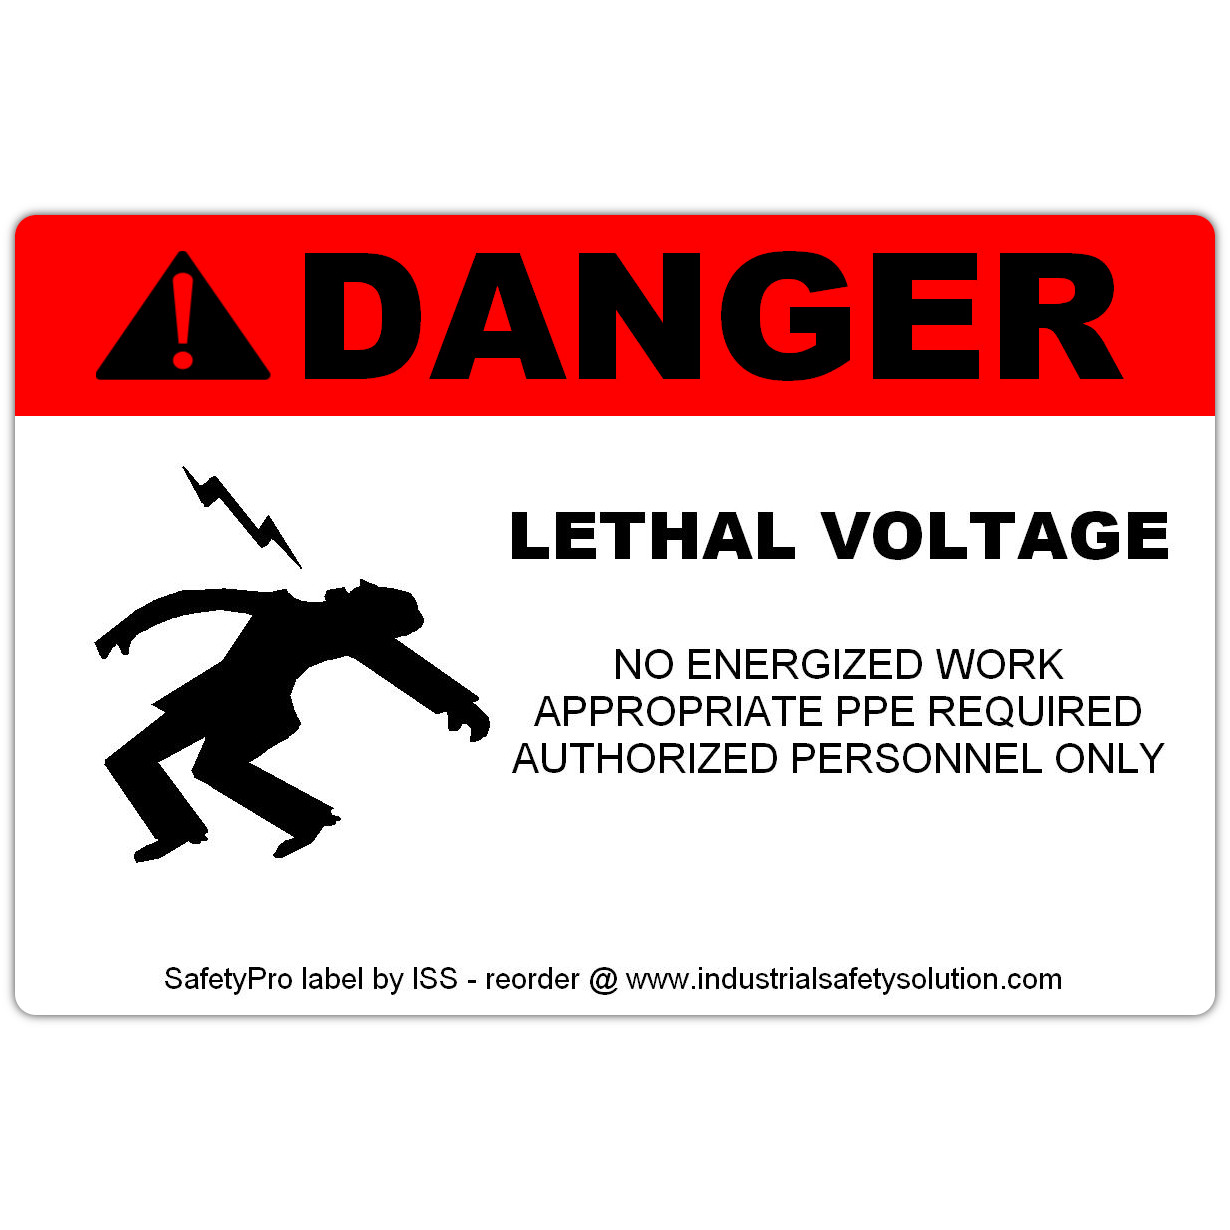 Detail view for 4" x 6" DANGER Lethal Voltage Safety Label